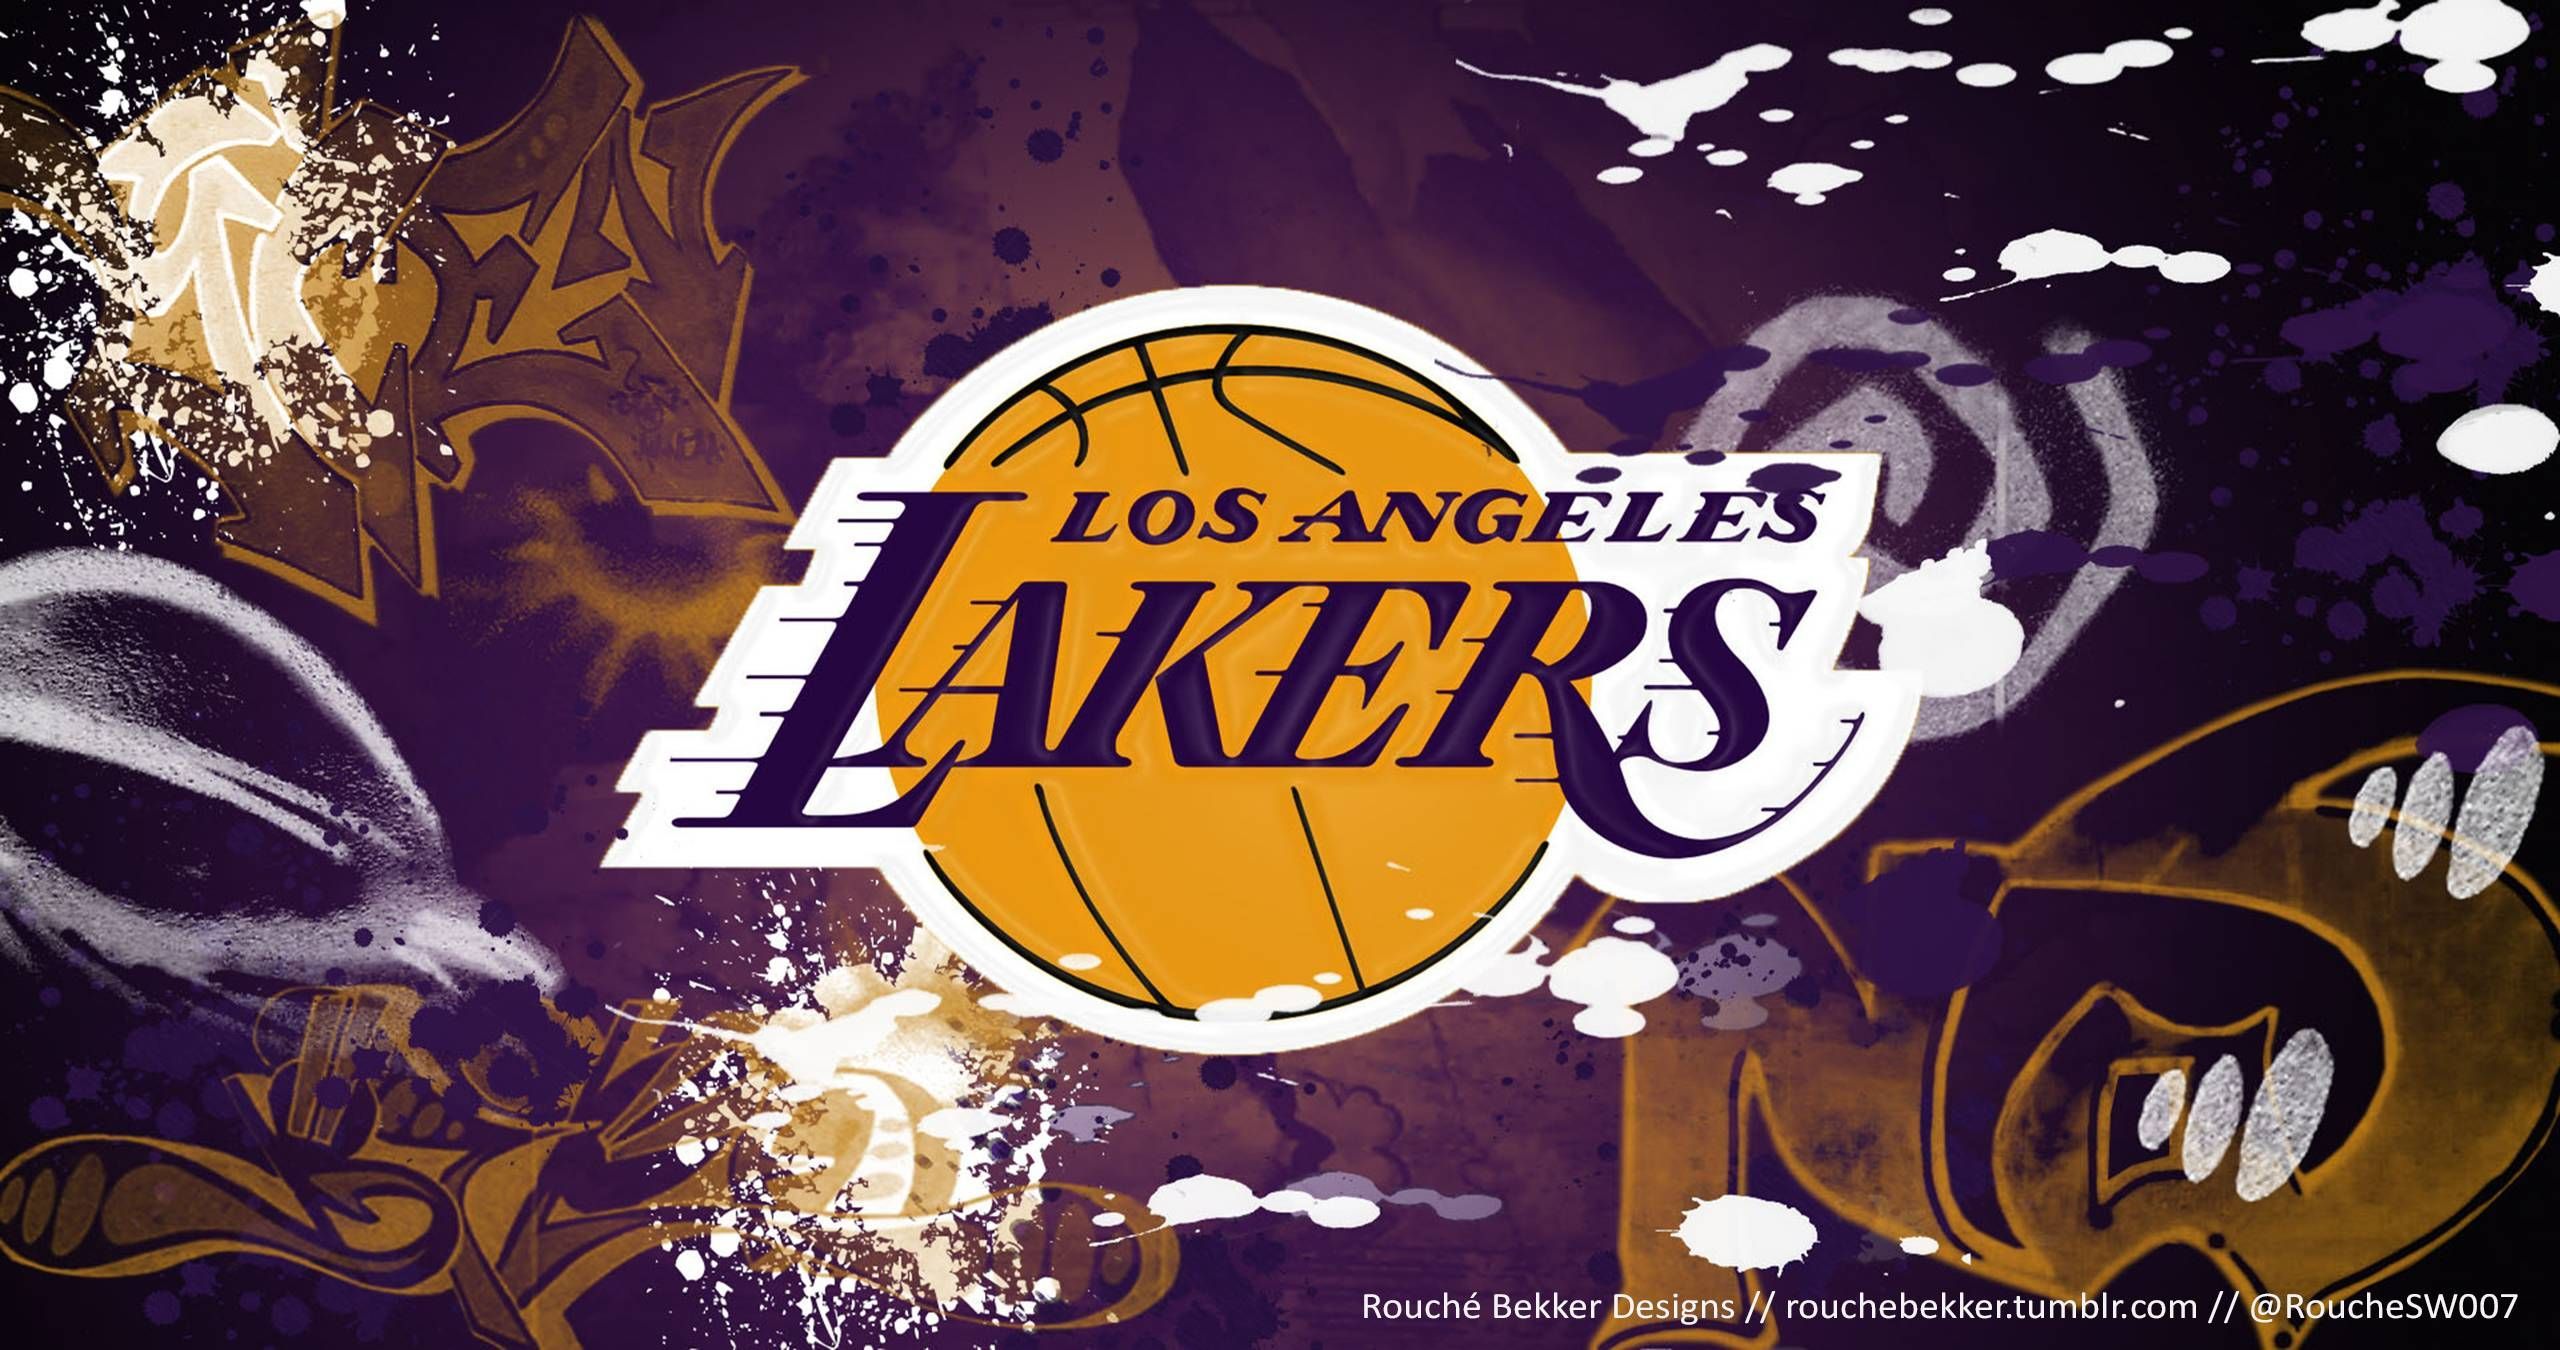 Lakers wallpaper, lakers logo wallpaper on shining blue Sports 2560×1350 LA Lakers Wallpaper HD 42 W. Lakers wallpaper, La lakers wallpaper, Lakers wallpaper